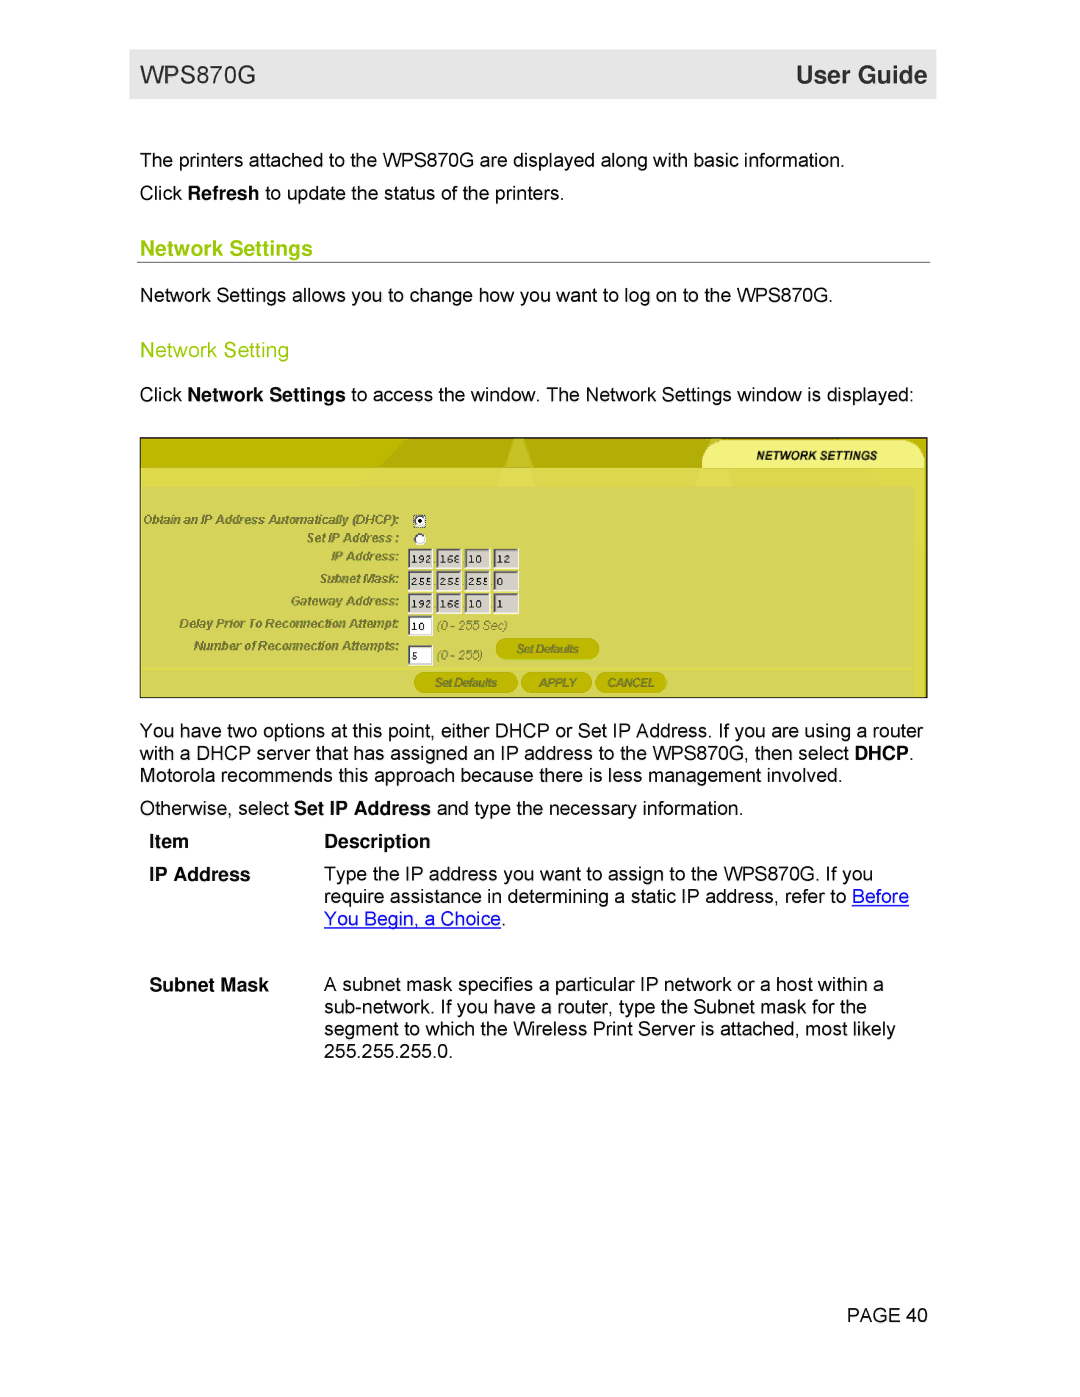 Motorola WPS870G manual Network Settings, IP Address, Subnet Mask 